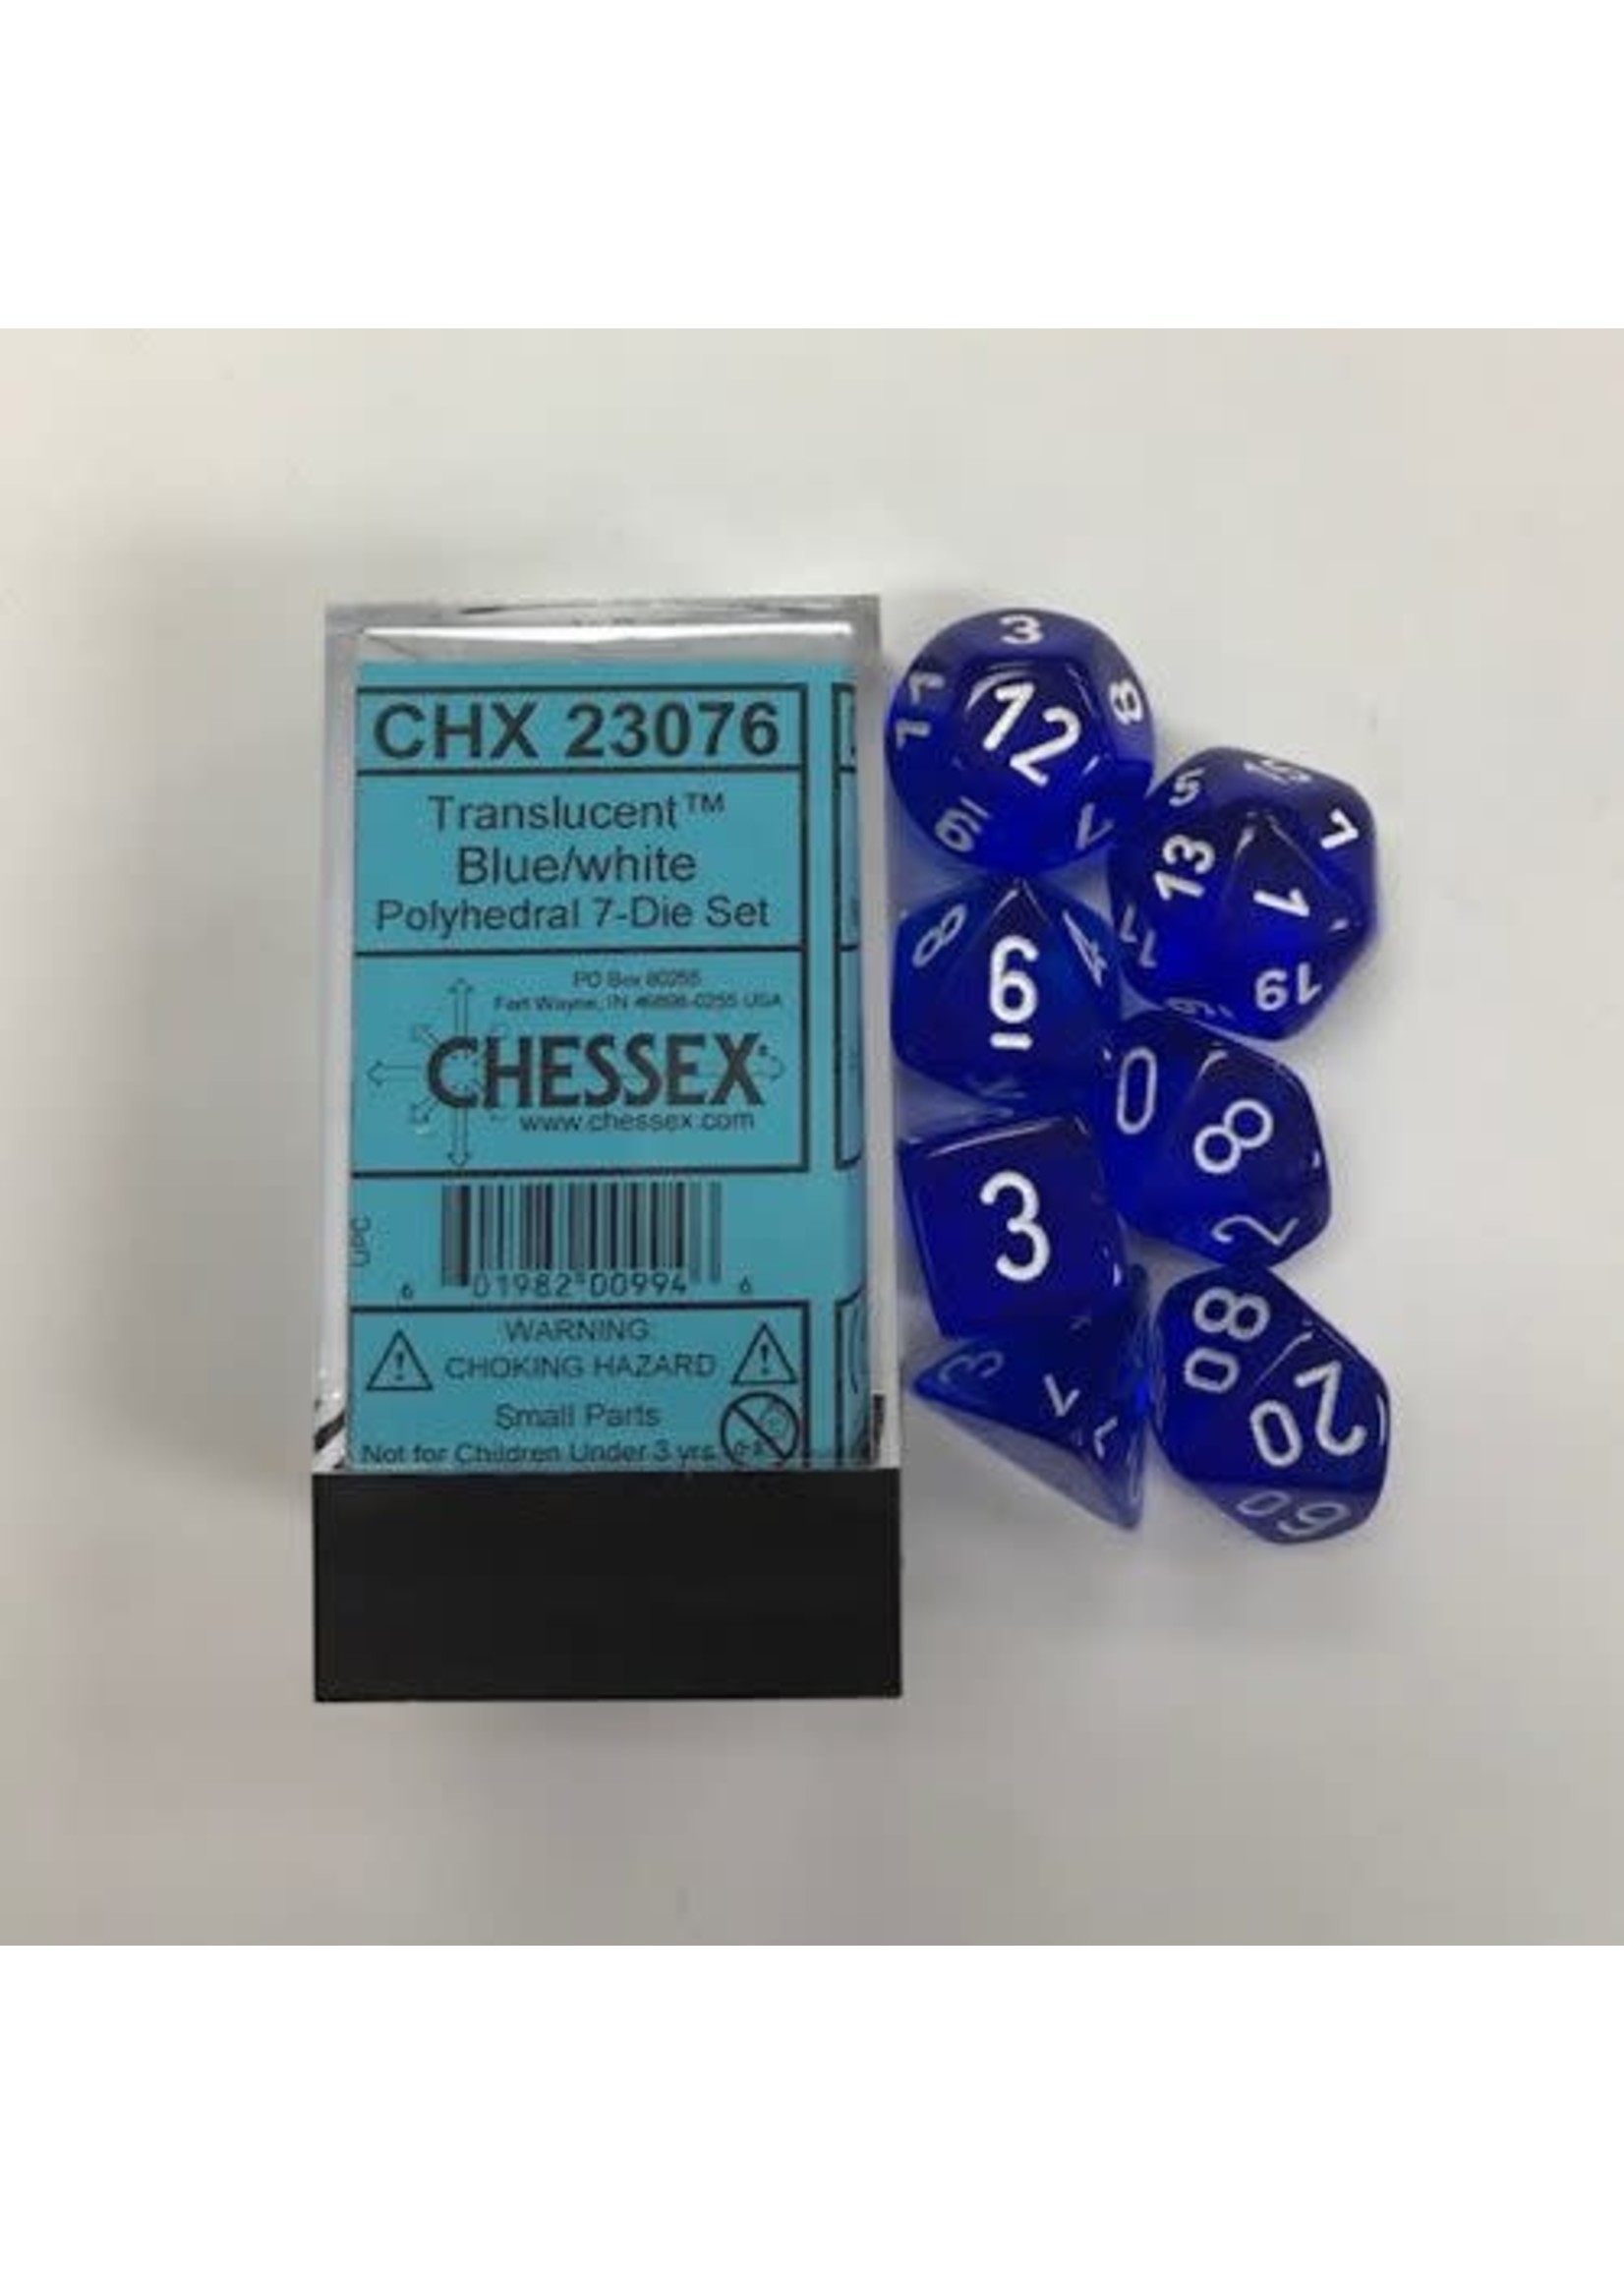 Chessex Translucent Poly 7 set: Blue w/ White